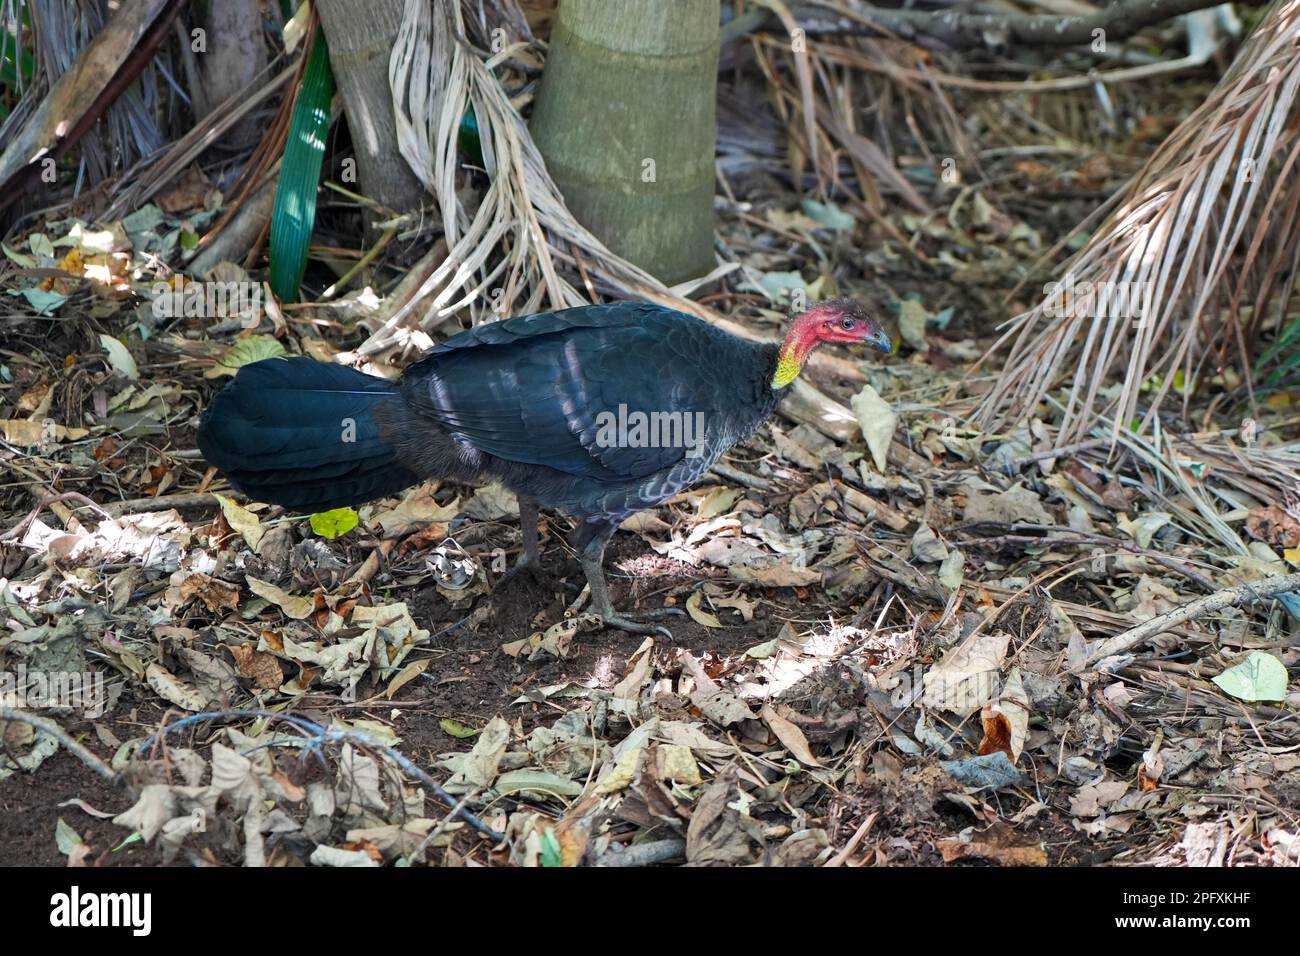 Australian Scrub or Bush Turkey on the forest floor Stock Photo